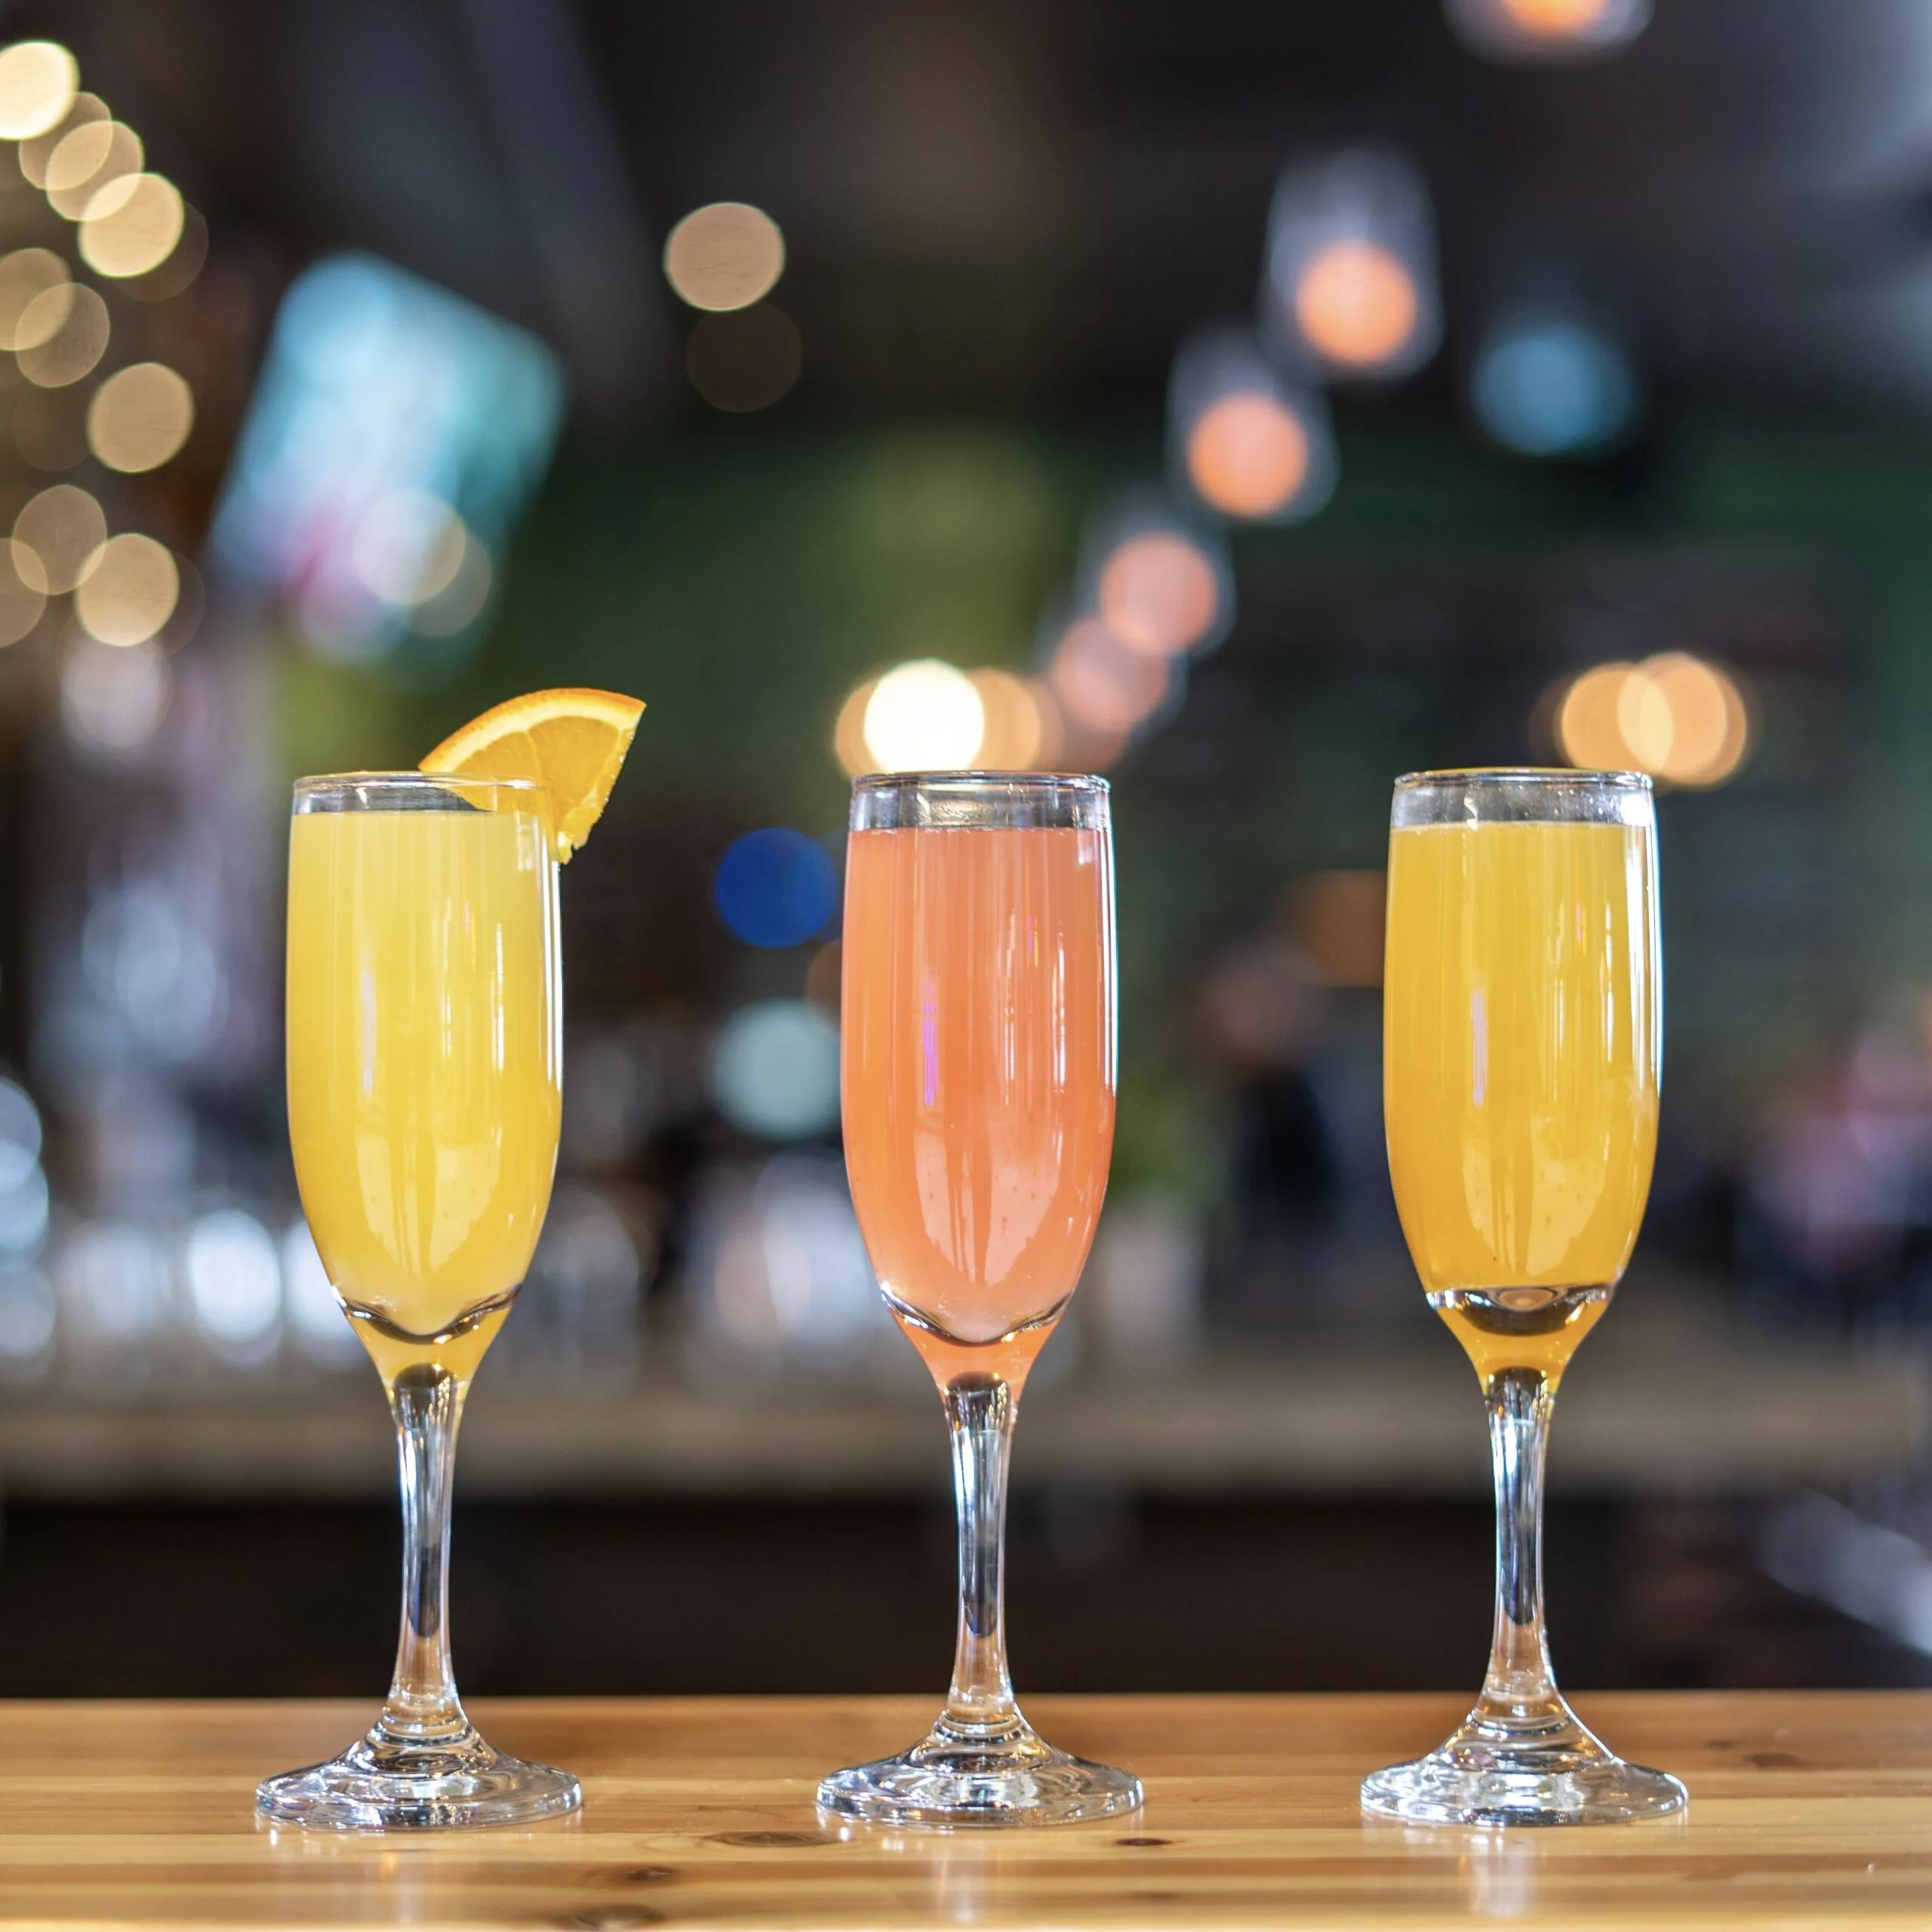 Enjoy bottomless mimosas every weekend!